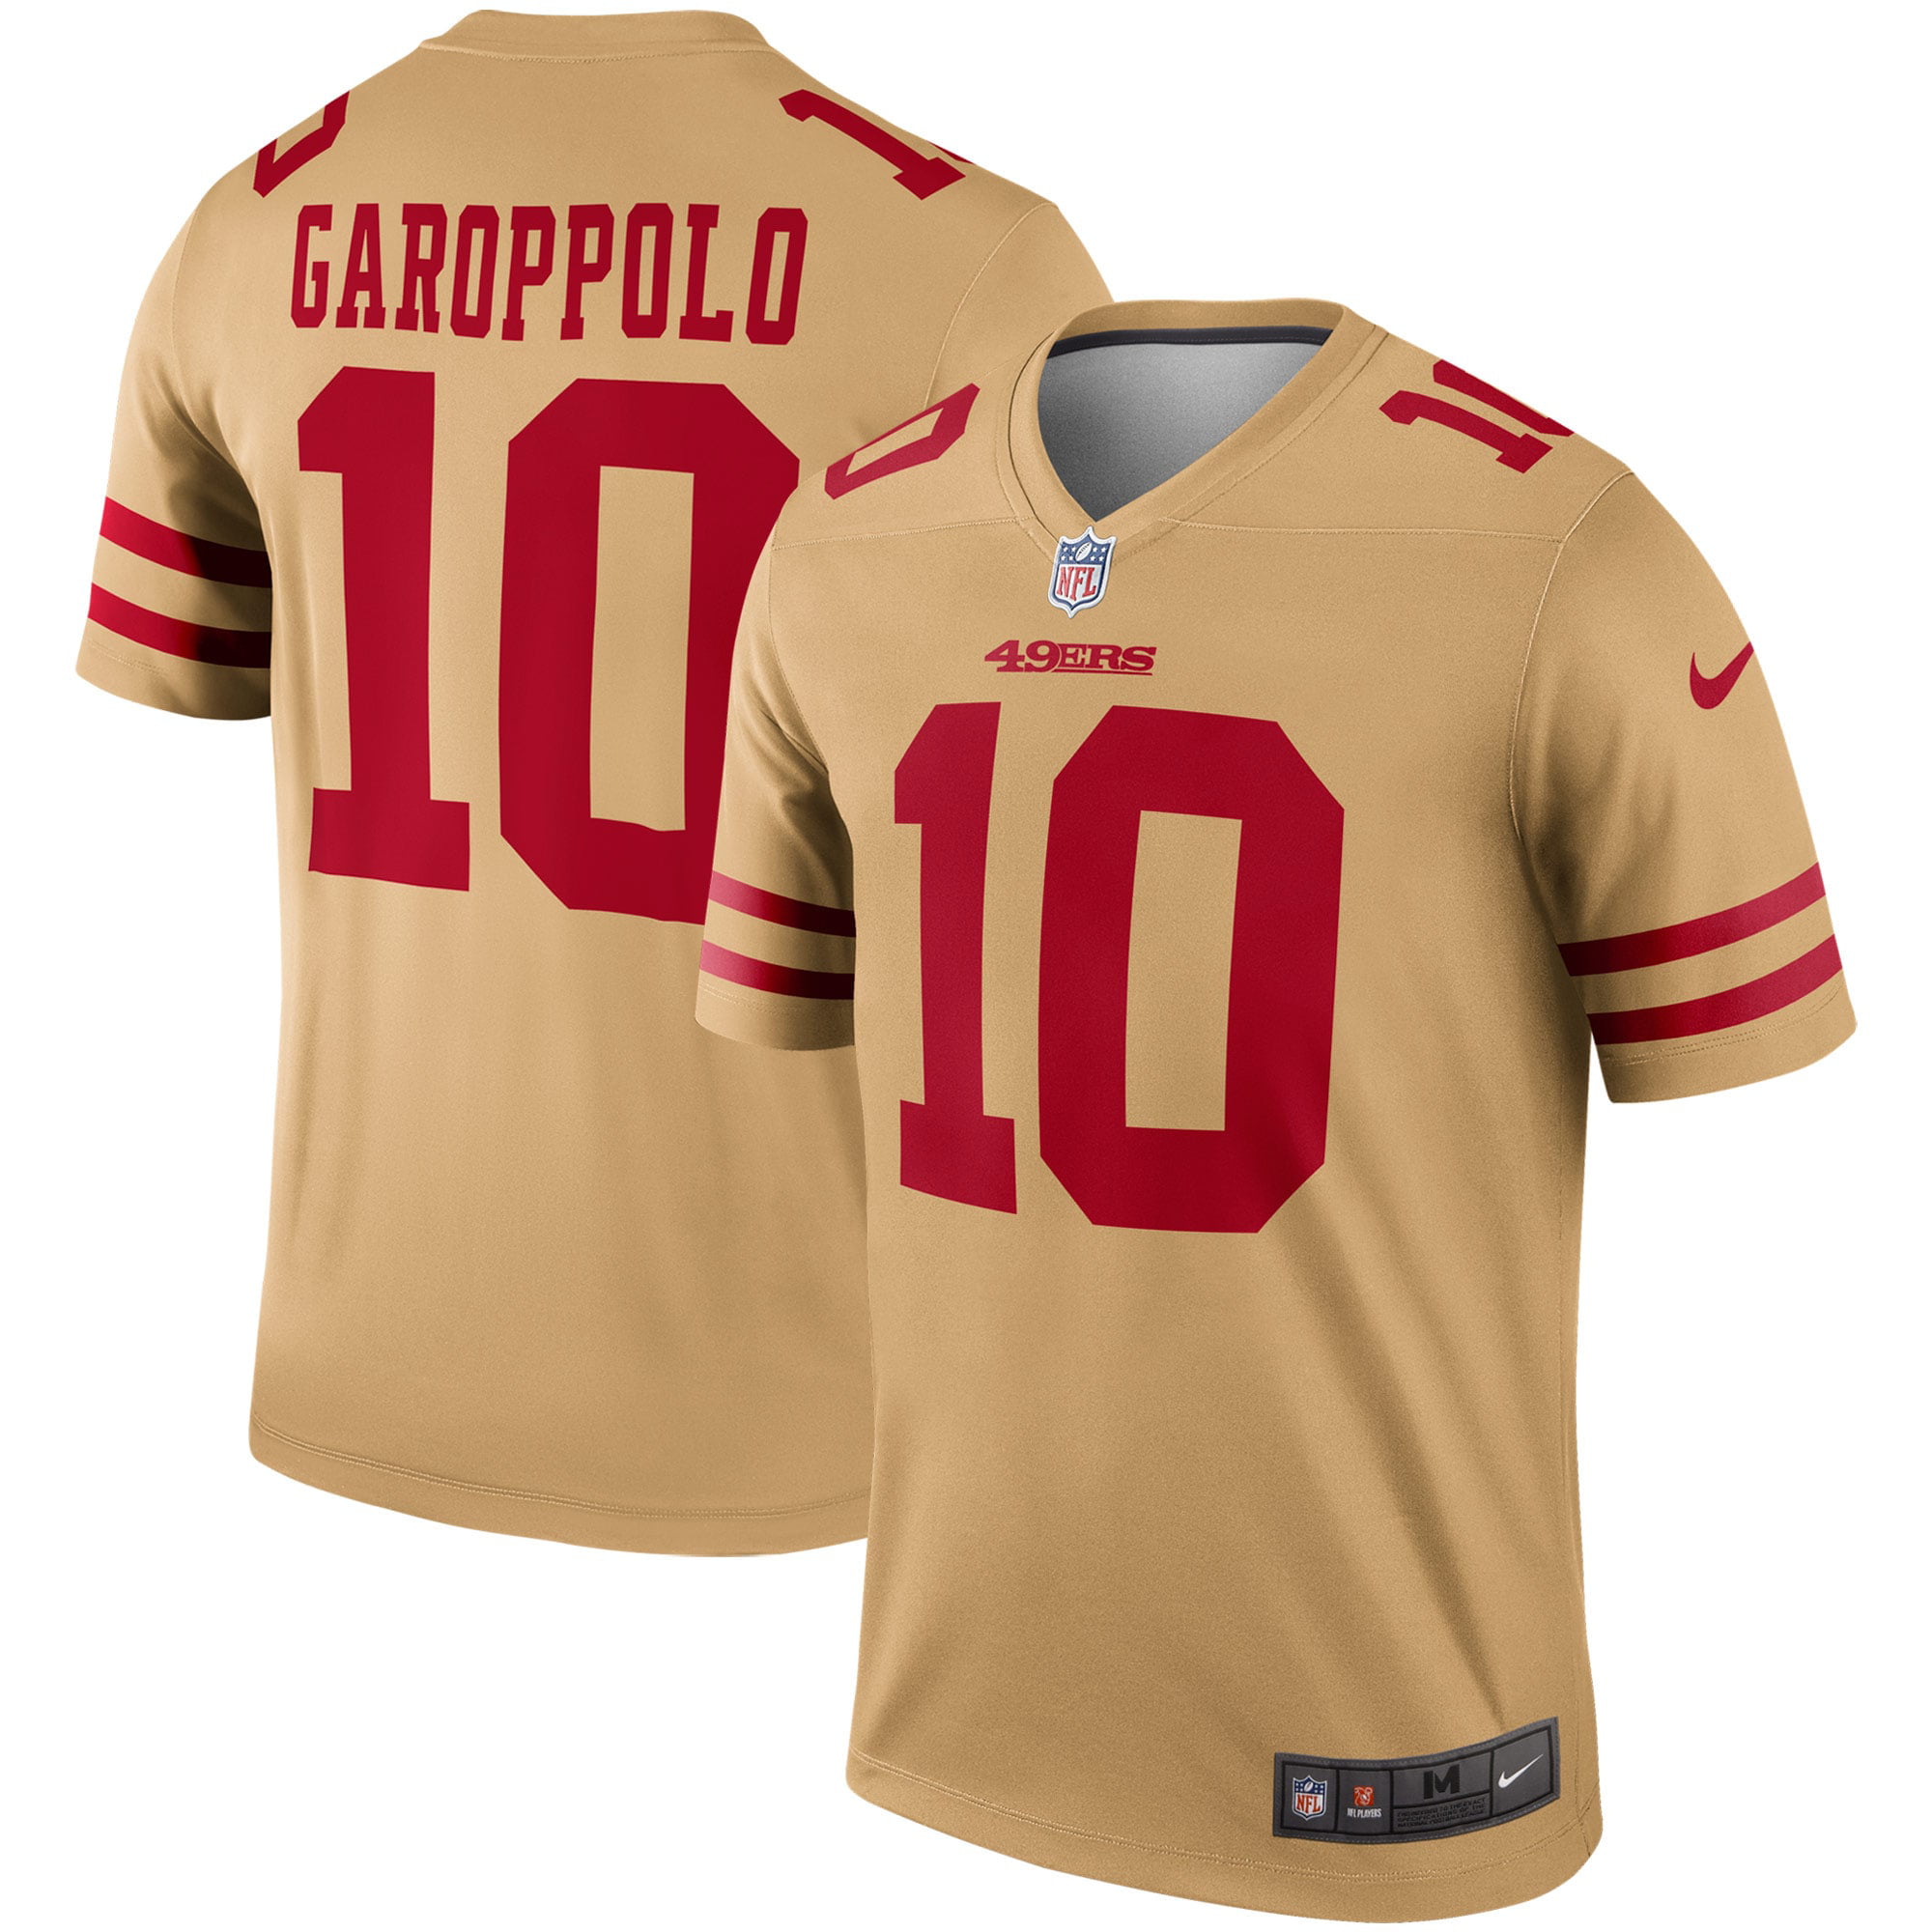 روز بار Men's Nike Jimmy Garoppolo Gold San Francisco 49ers Inverted ... روز بار